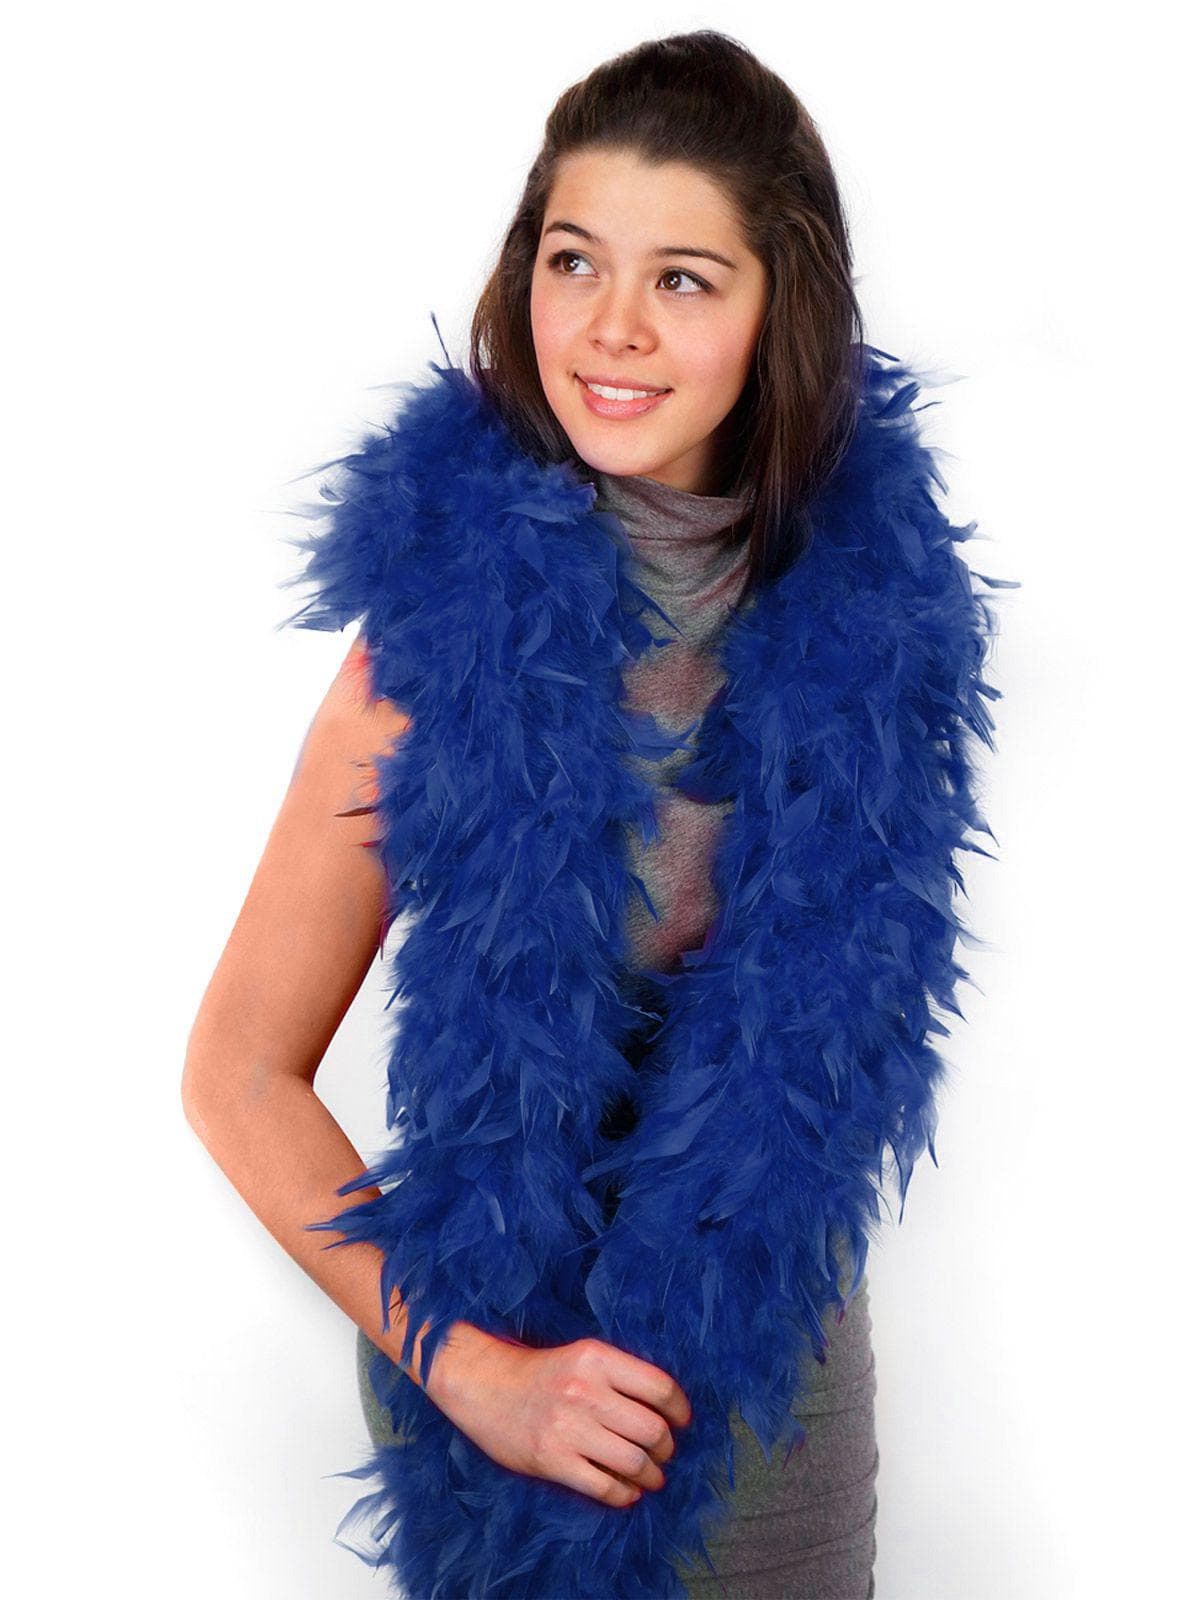 Blue Boa Accessory - costumes.com